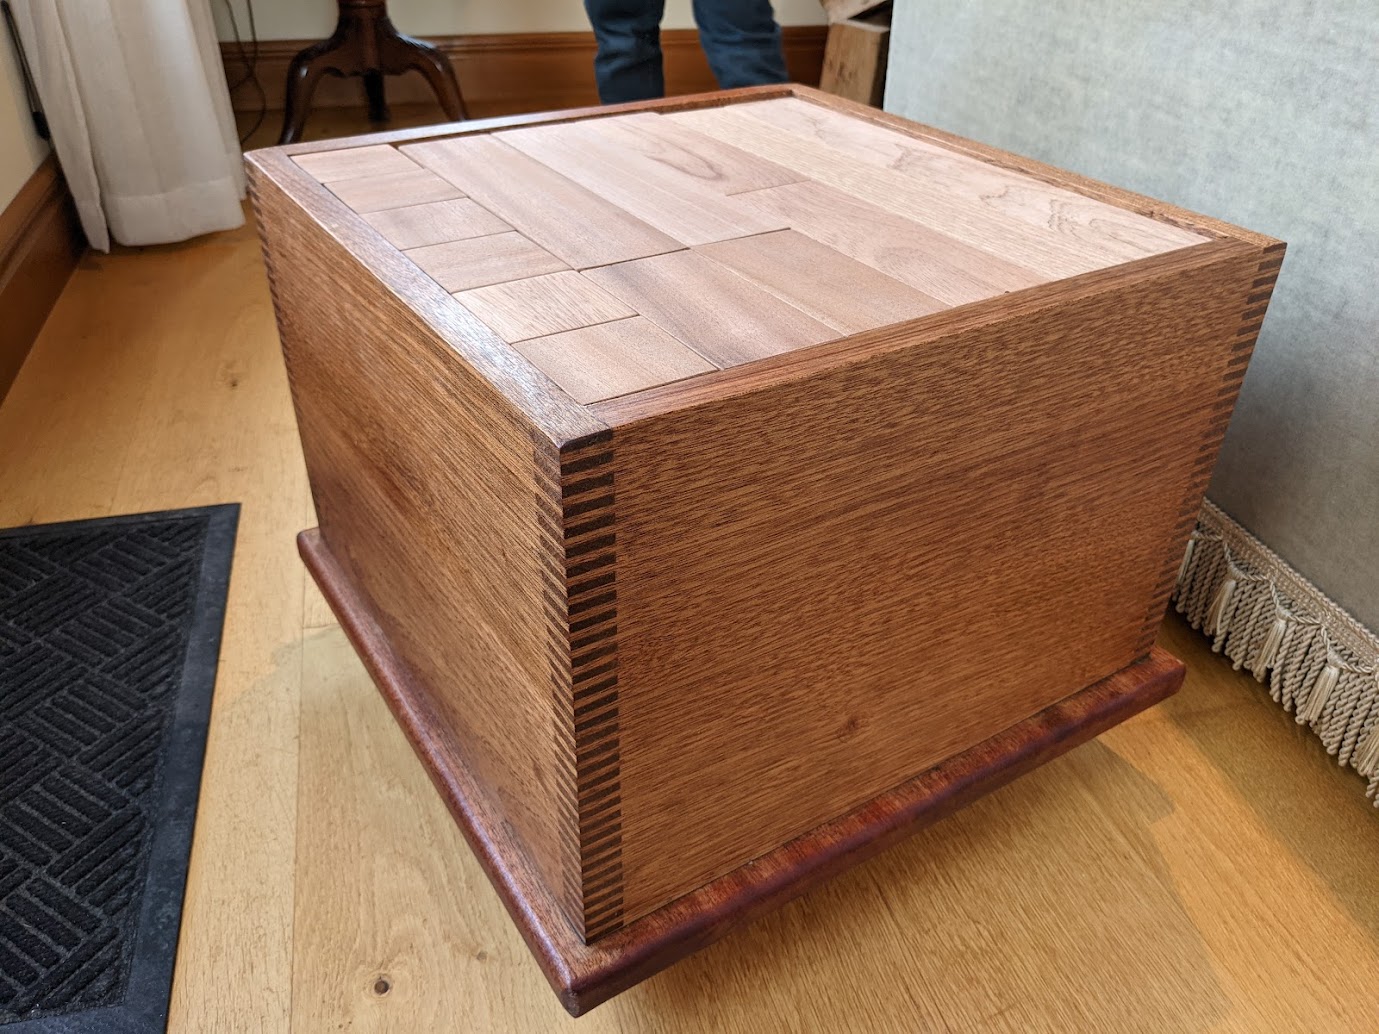 Wooden blocks in box